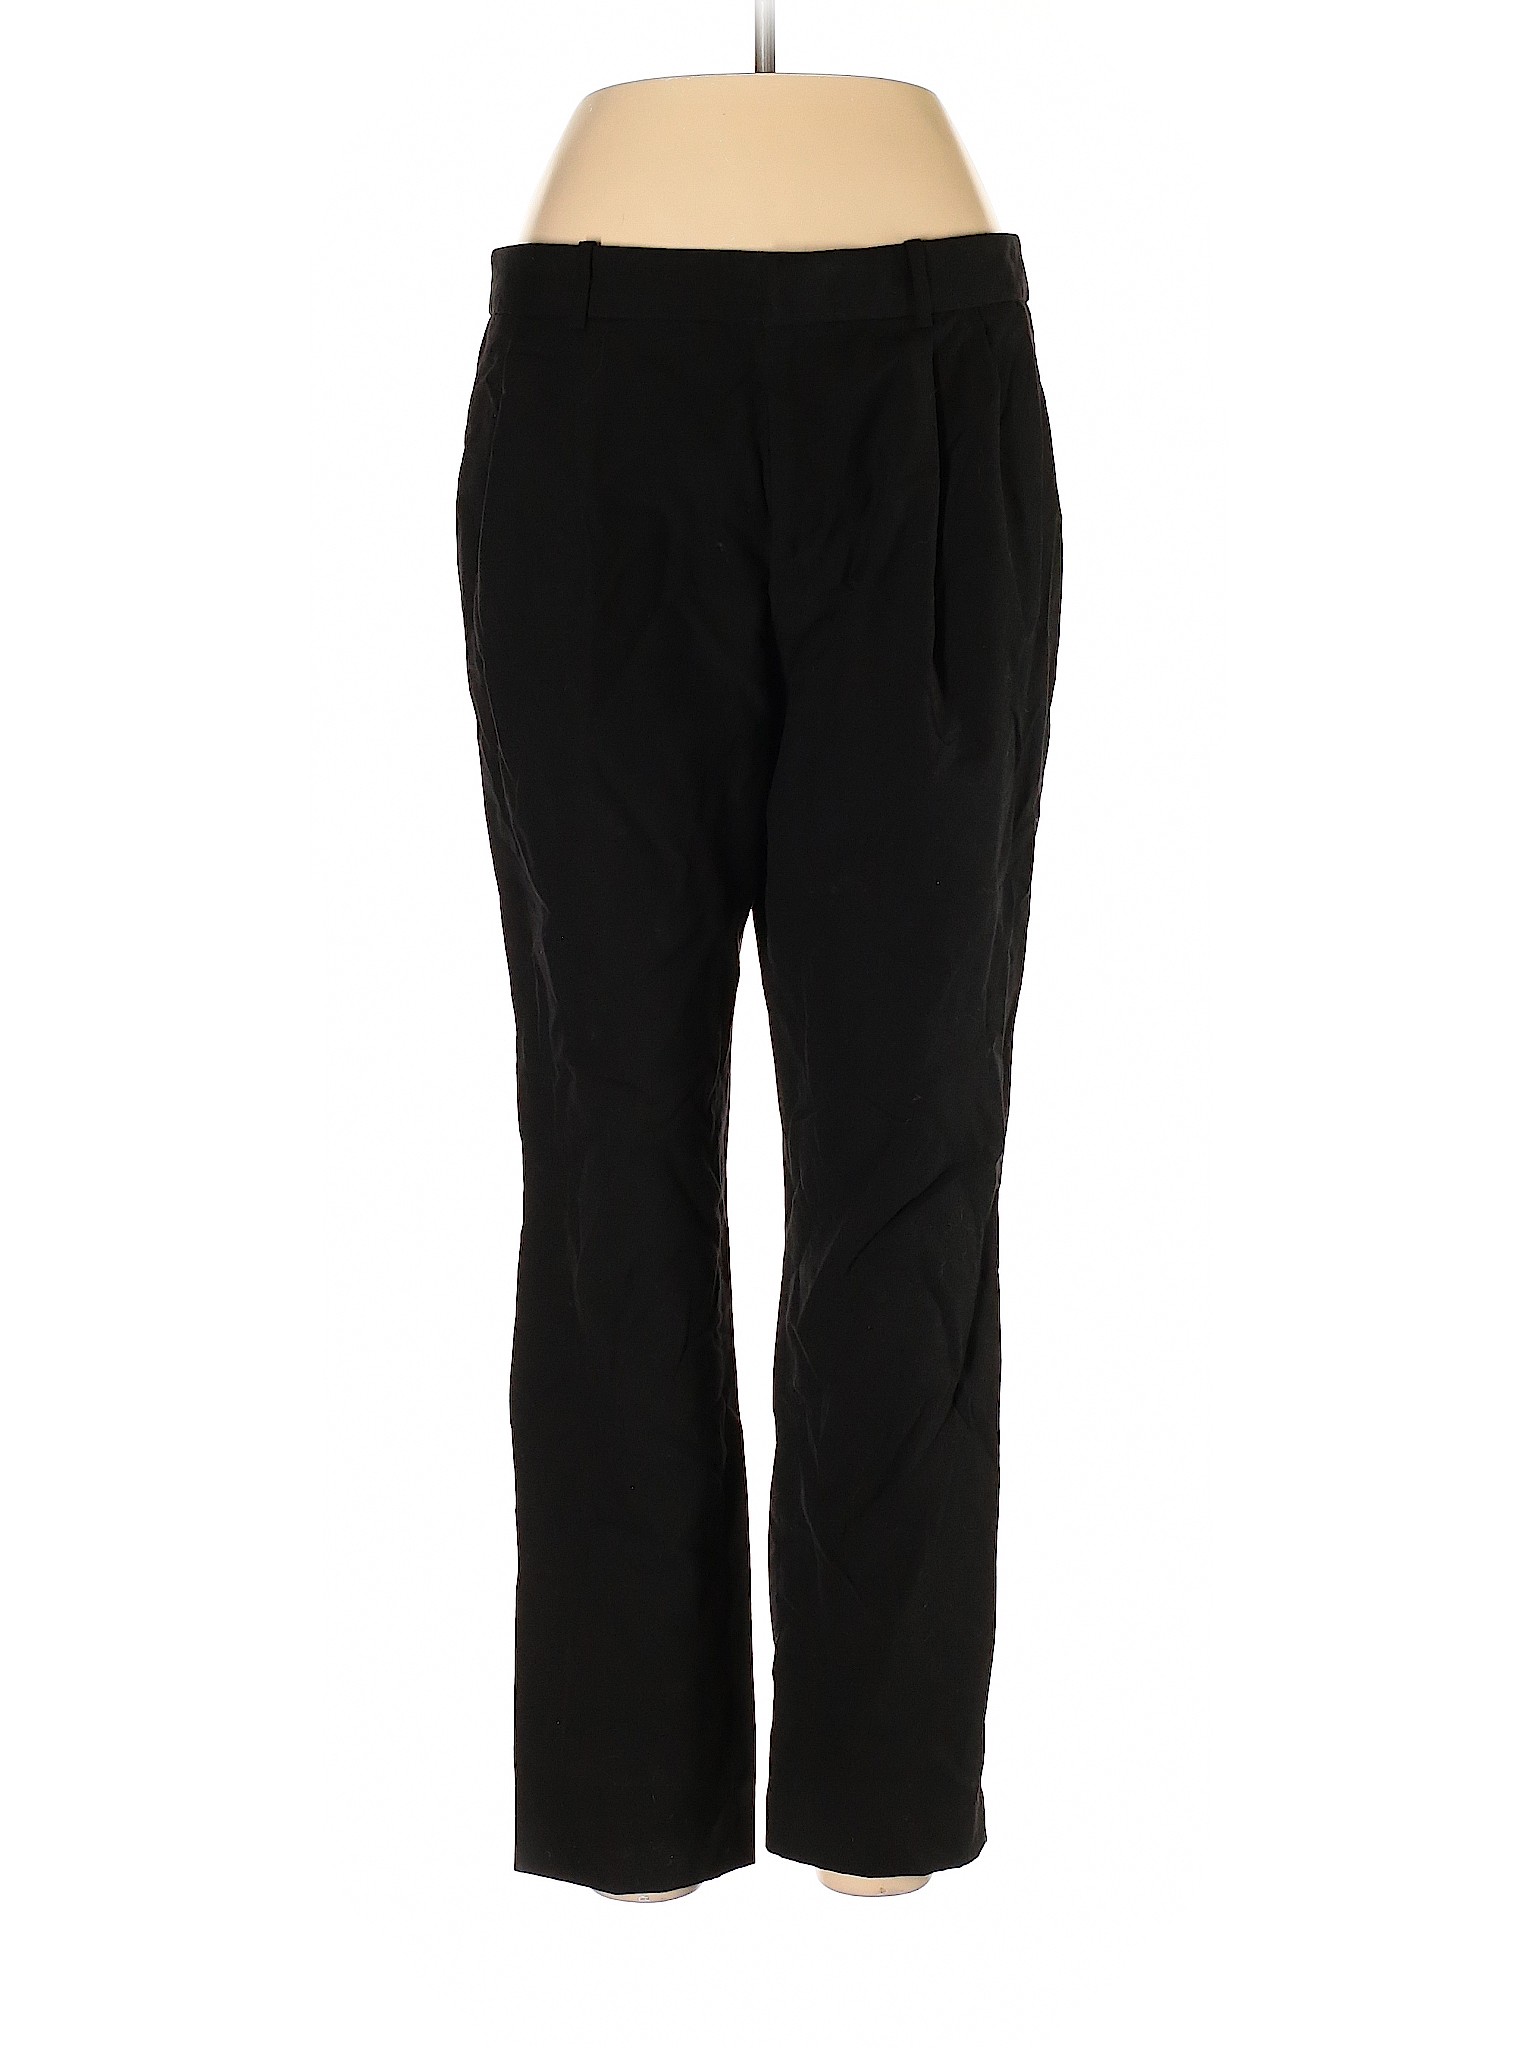 Madewell Women Black Wool Pants 8 | eBay